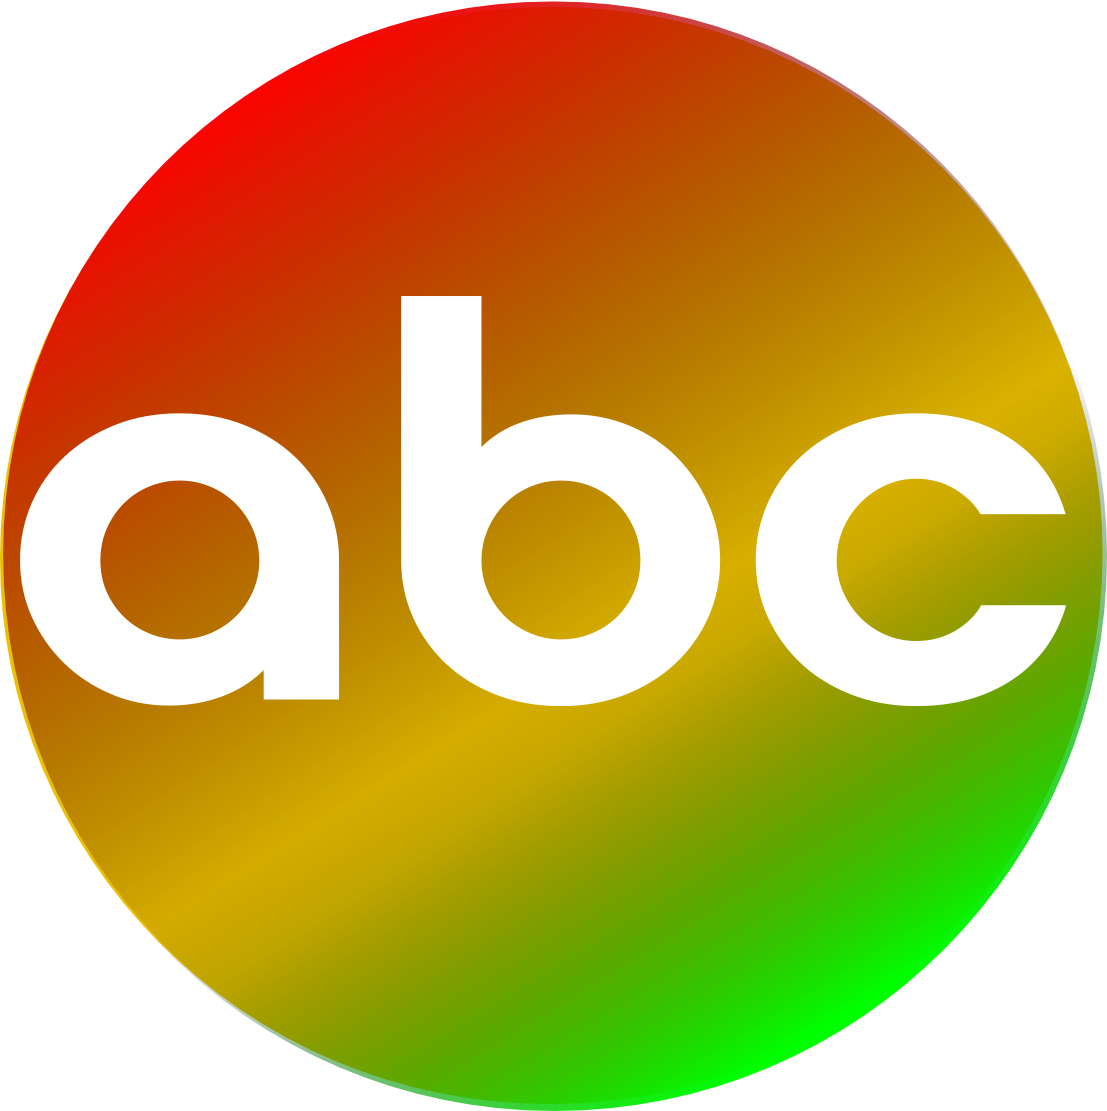 Abc Logo PNG-PlusPNG.com-1600